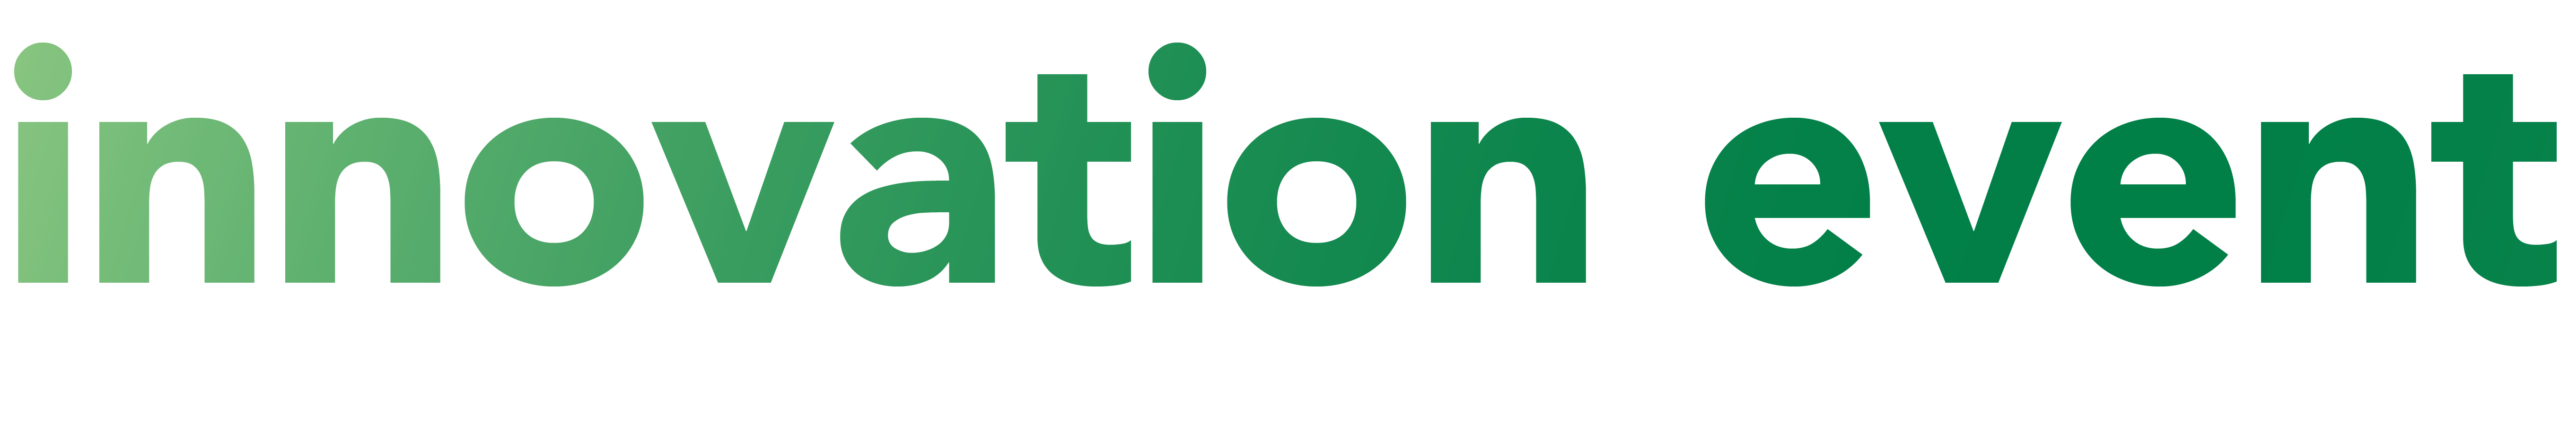 Innovation Event Logo